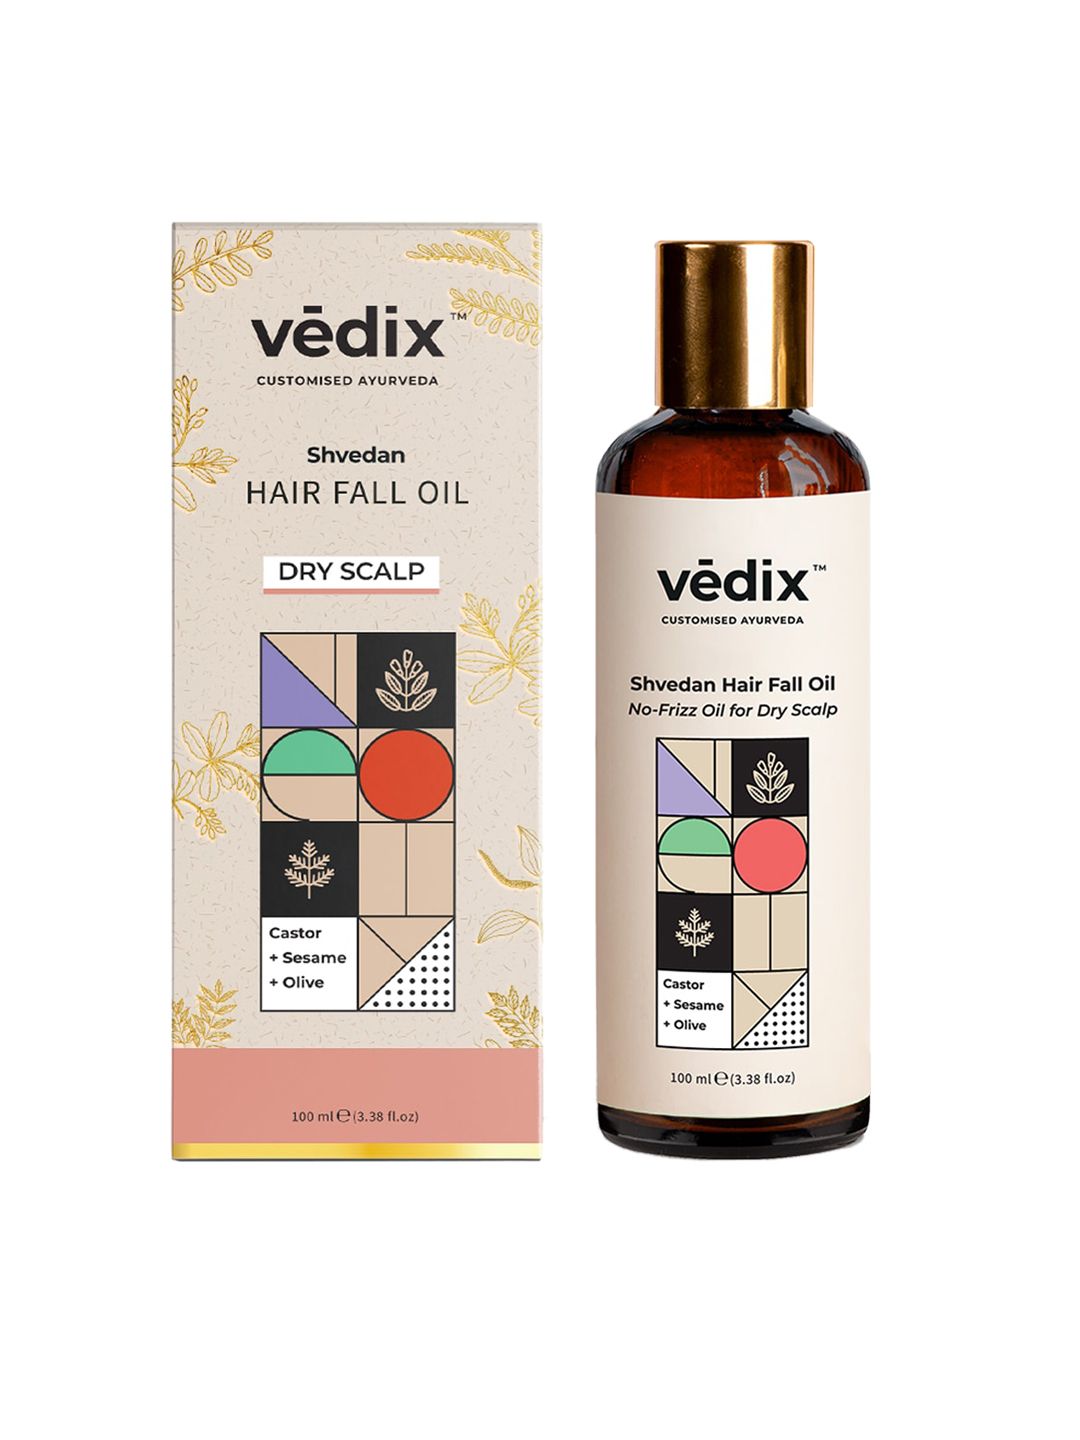 Vedix Shvedan Hair Fall Oil - 100 ml Price in India